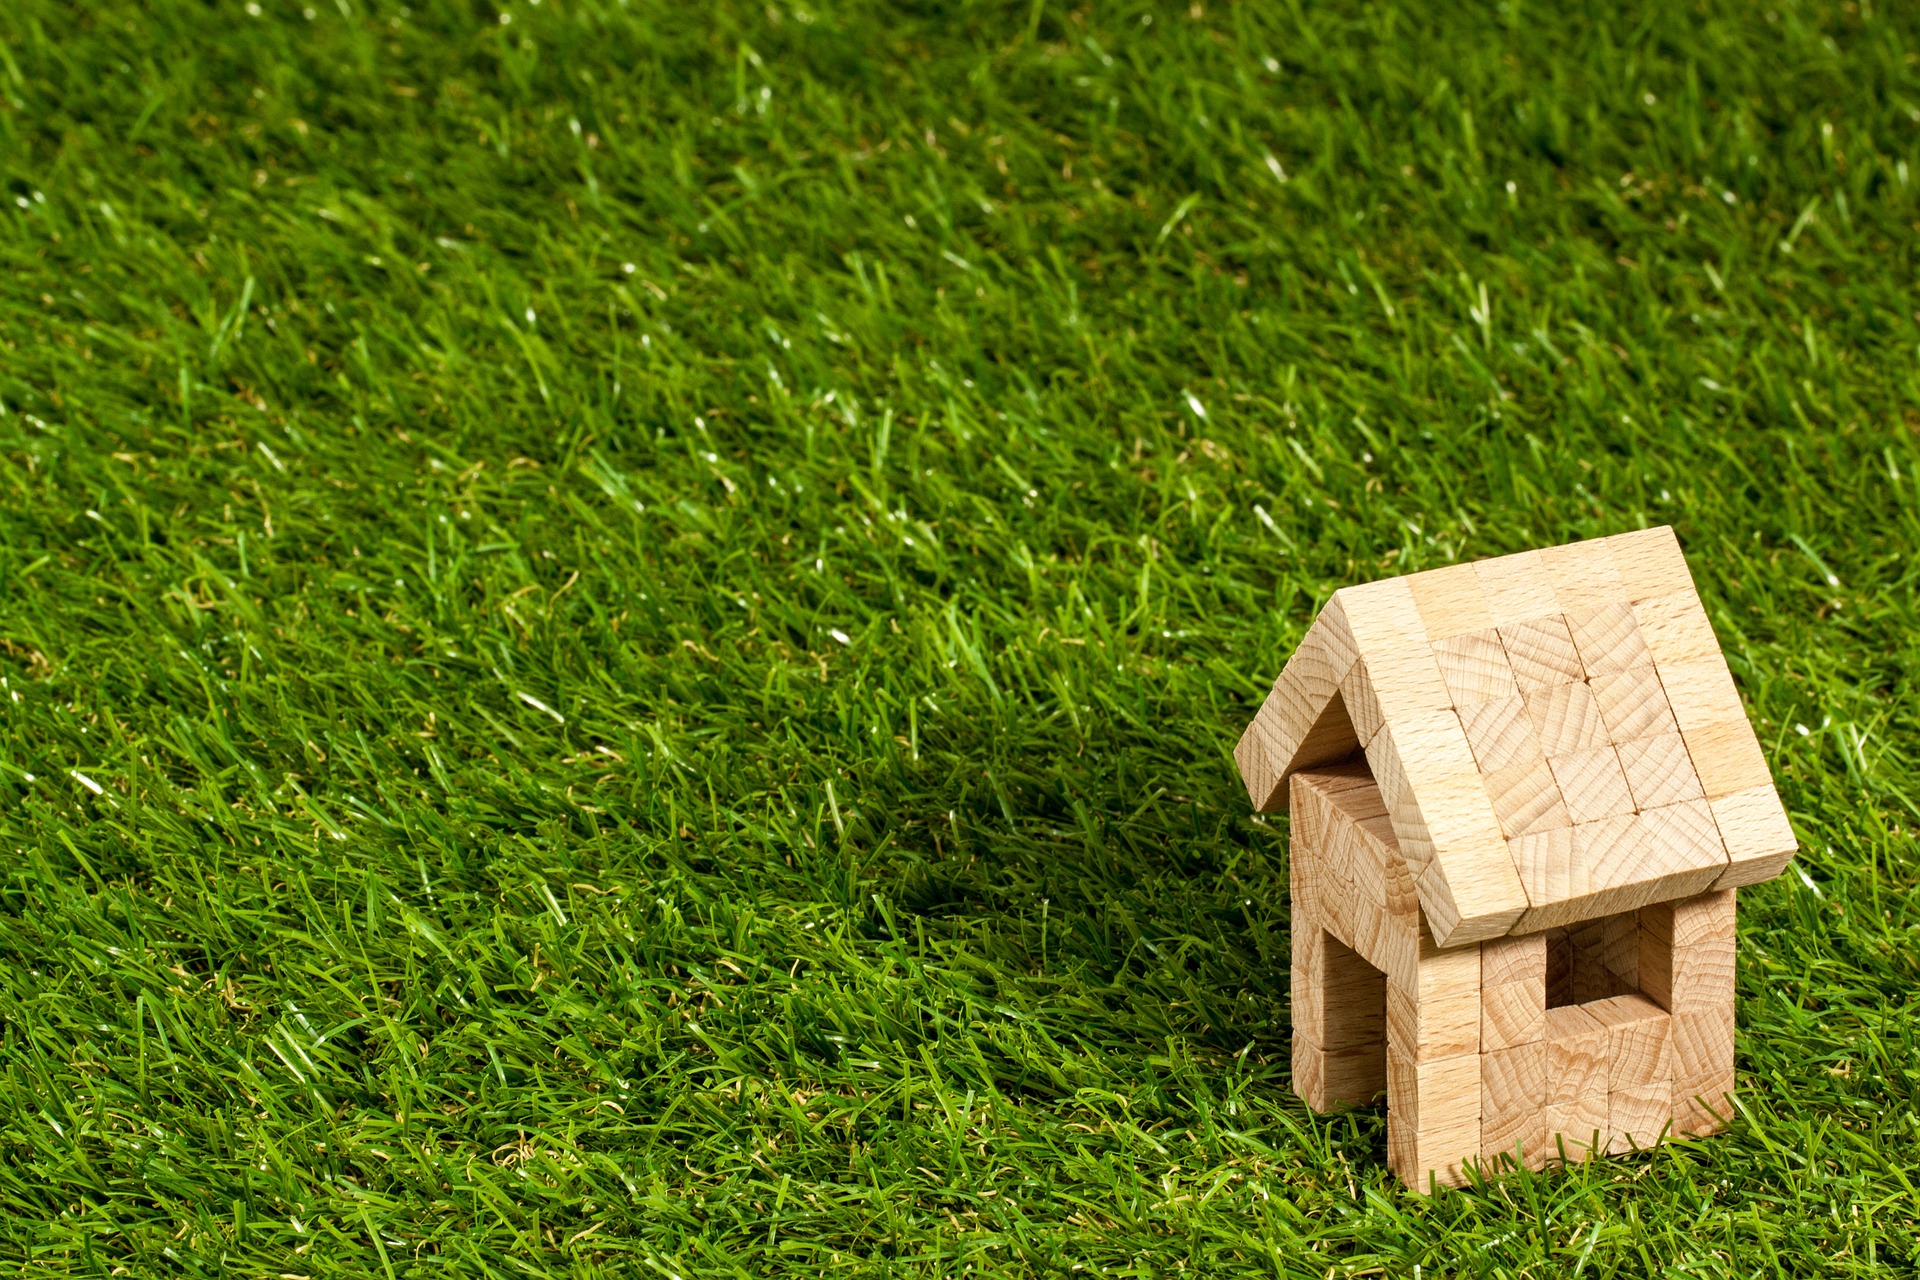 Miniature, wooden block home sitting on grassed ground